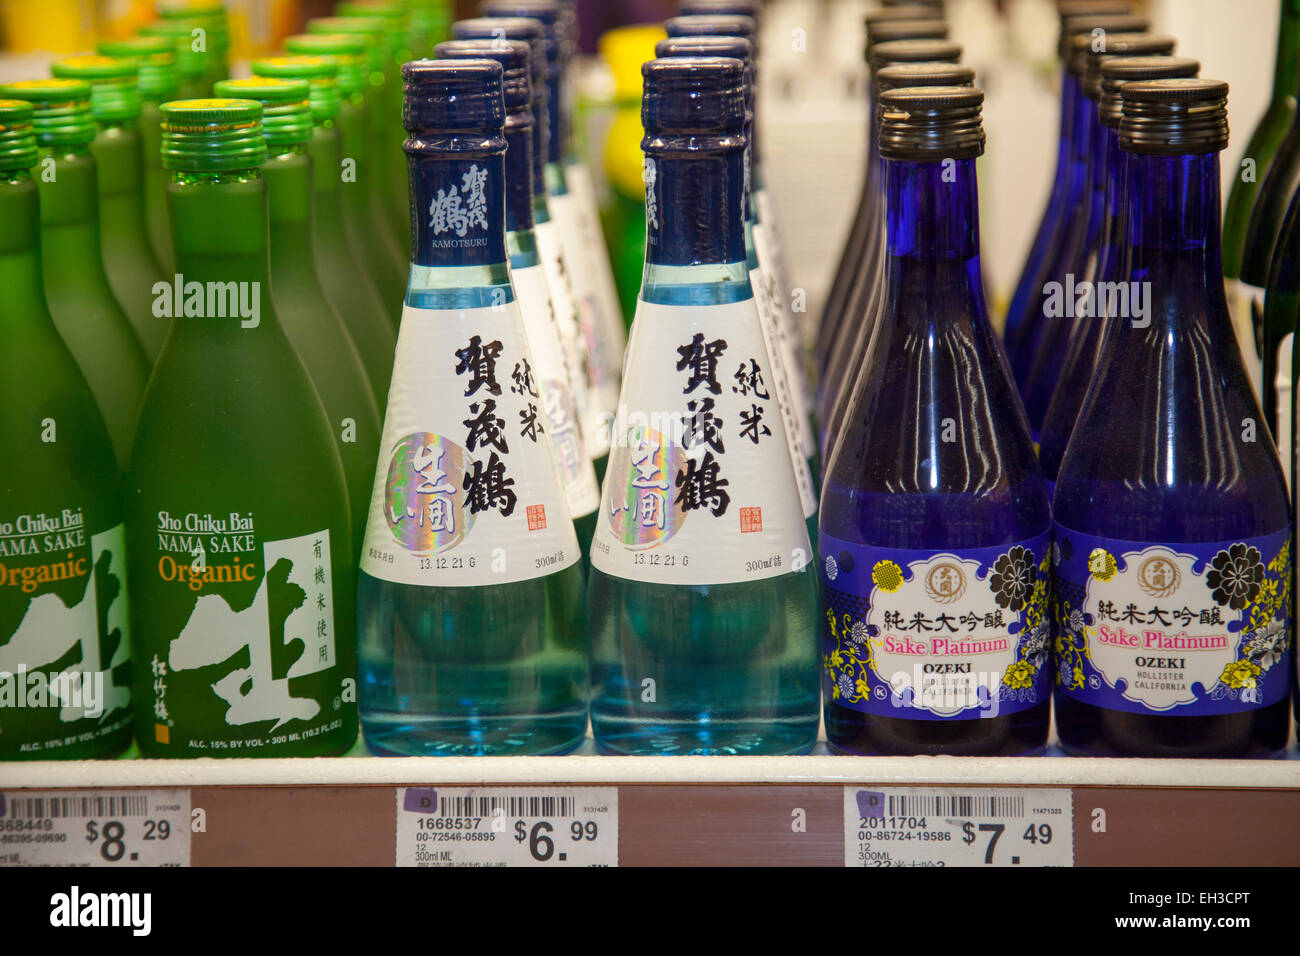 Sake wine bottles on the shelf in an Asian market, Richmond, California, USA. Stock Photo